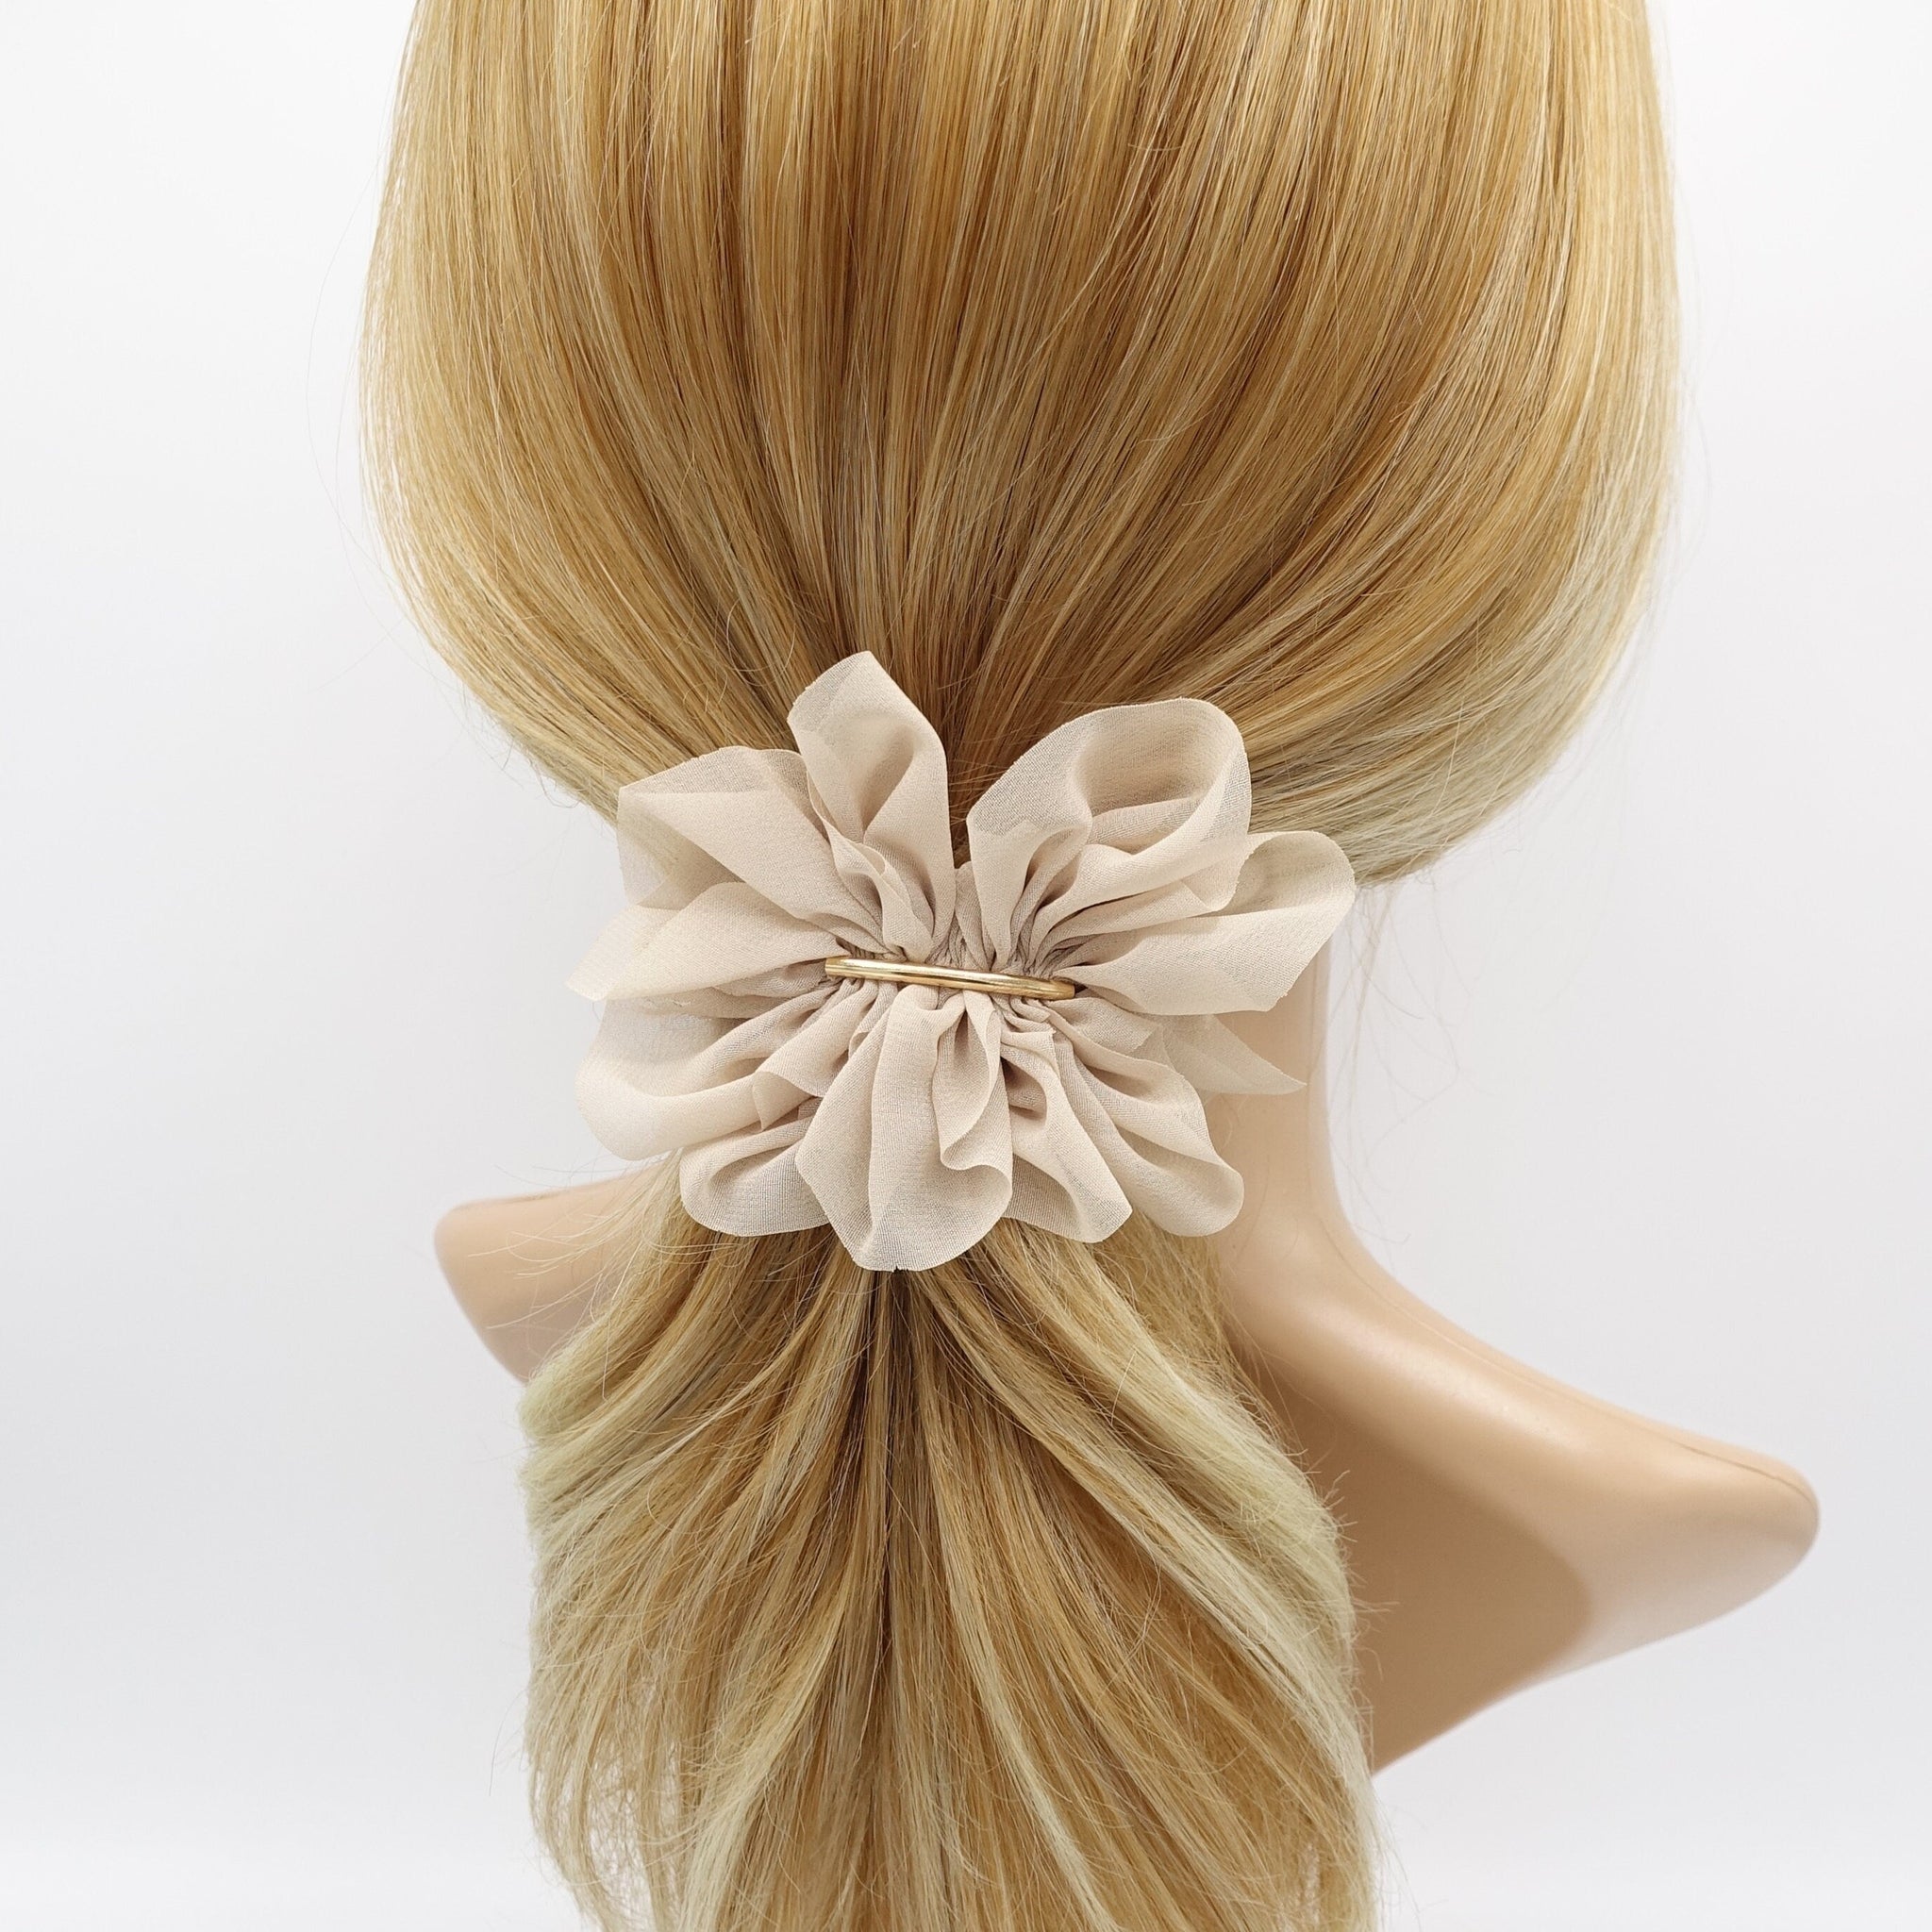 veryshine.com Barrette (Bow) Beige chiffon flower barrette, ruffle flower barrette, cute hair accessory for women